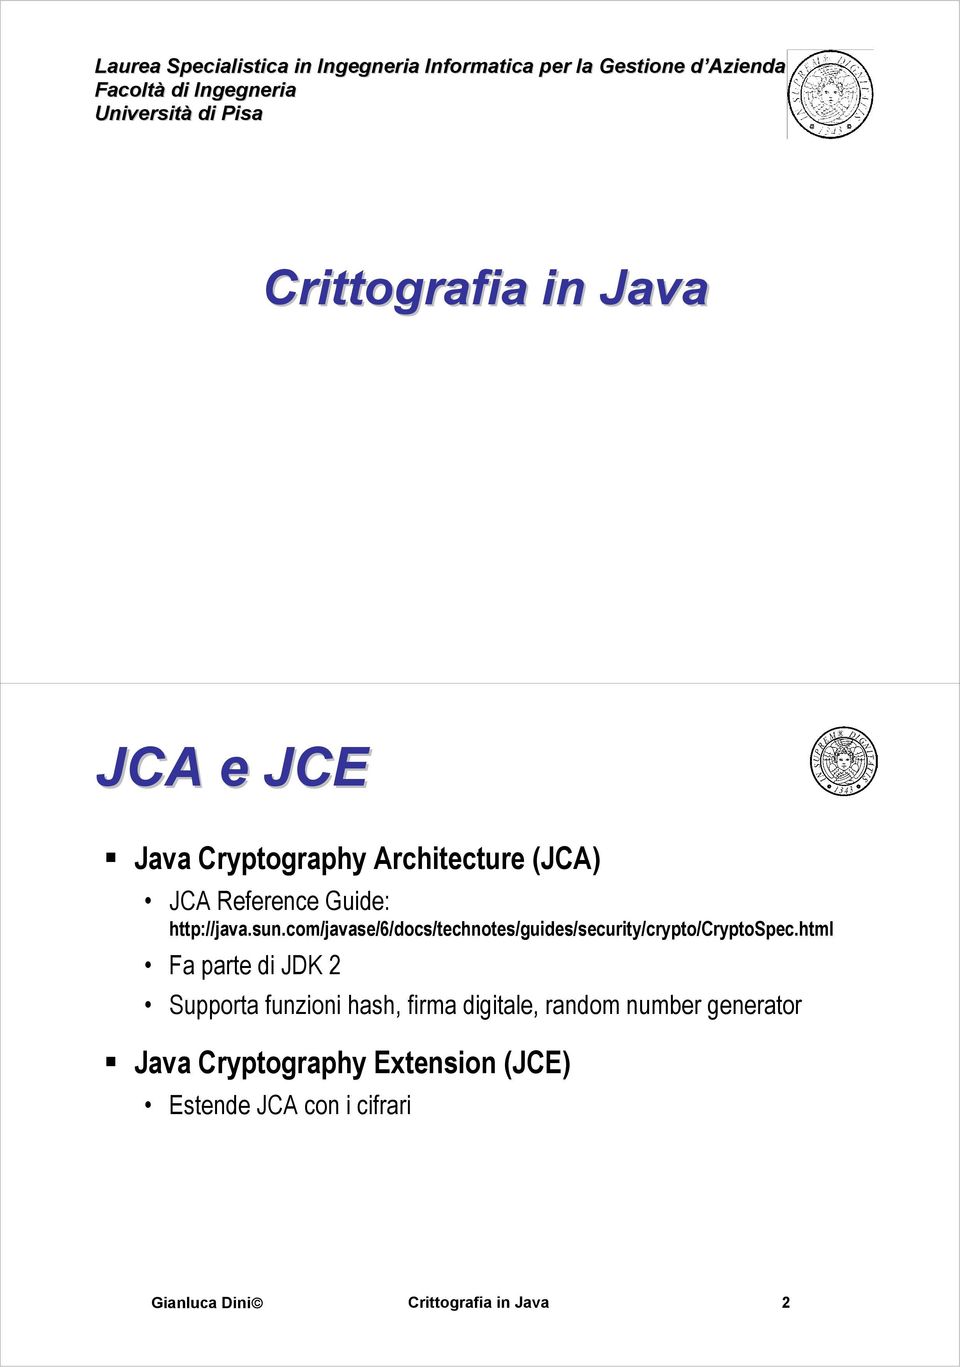 http://java.sun.com/javase/6/docs/technotes/guides/security/crypto/cryptospec.